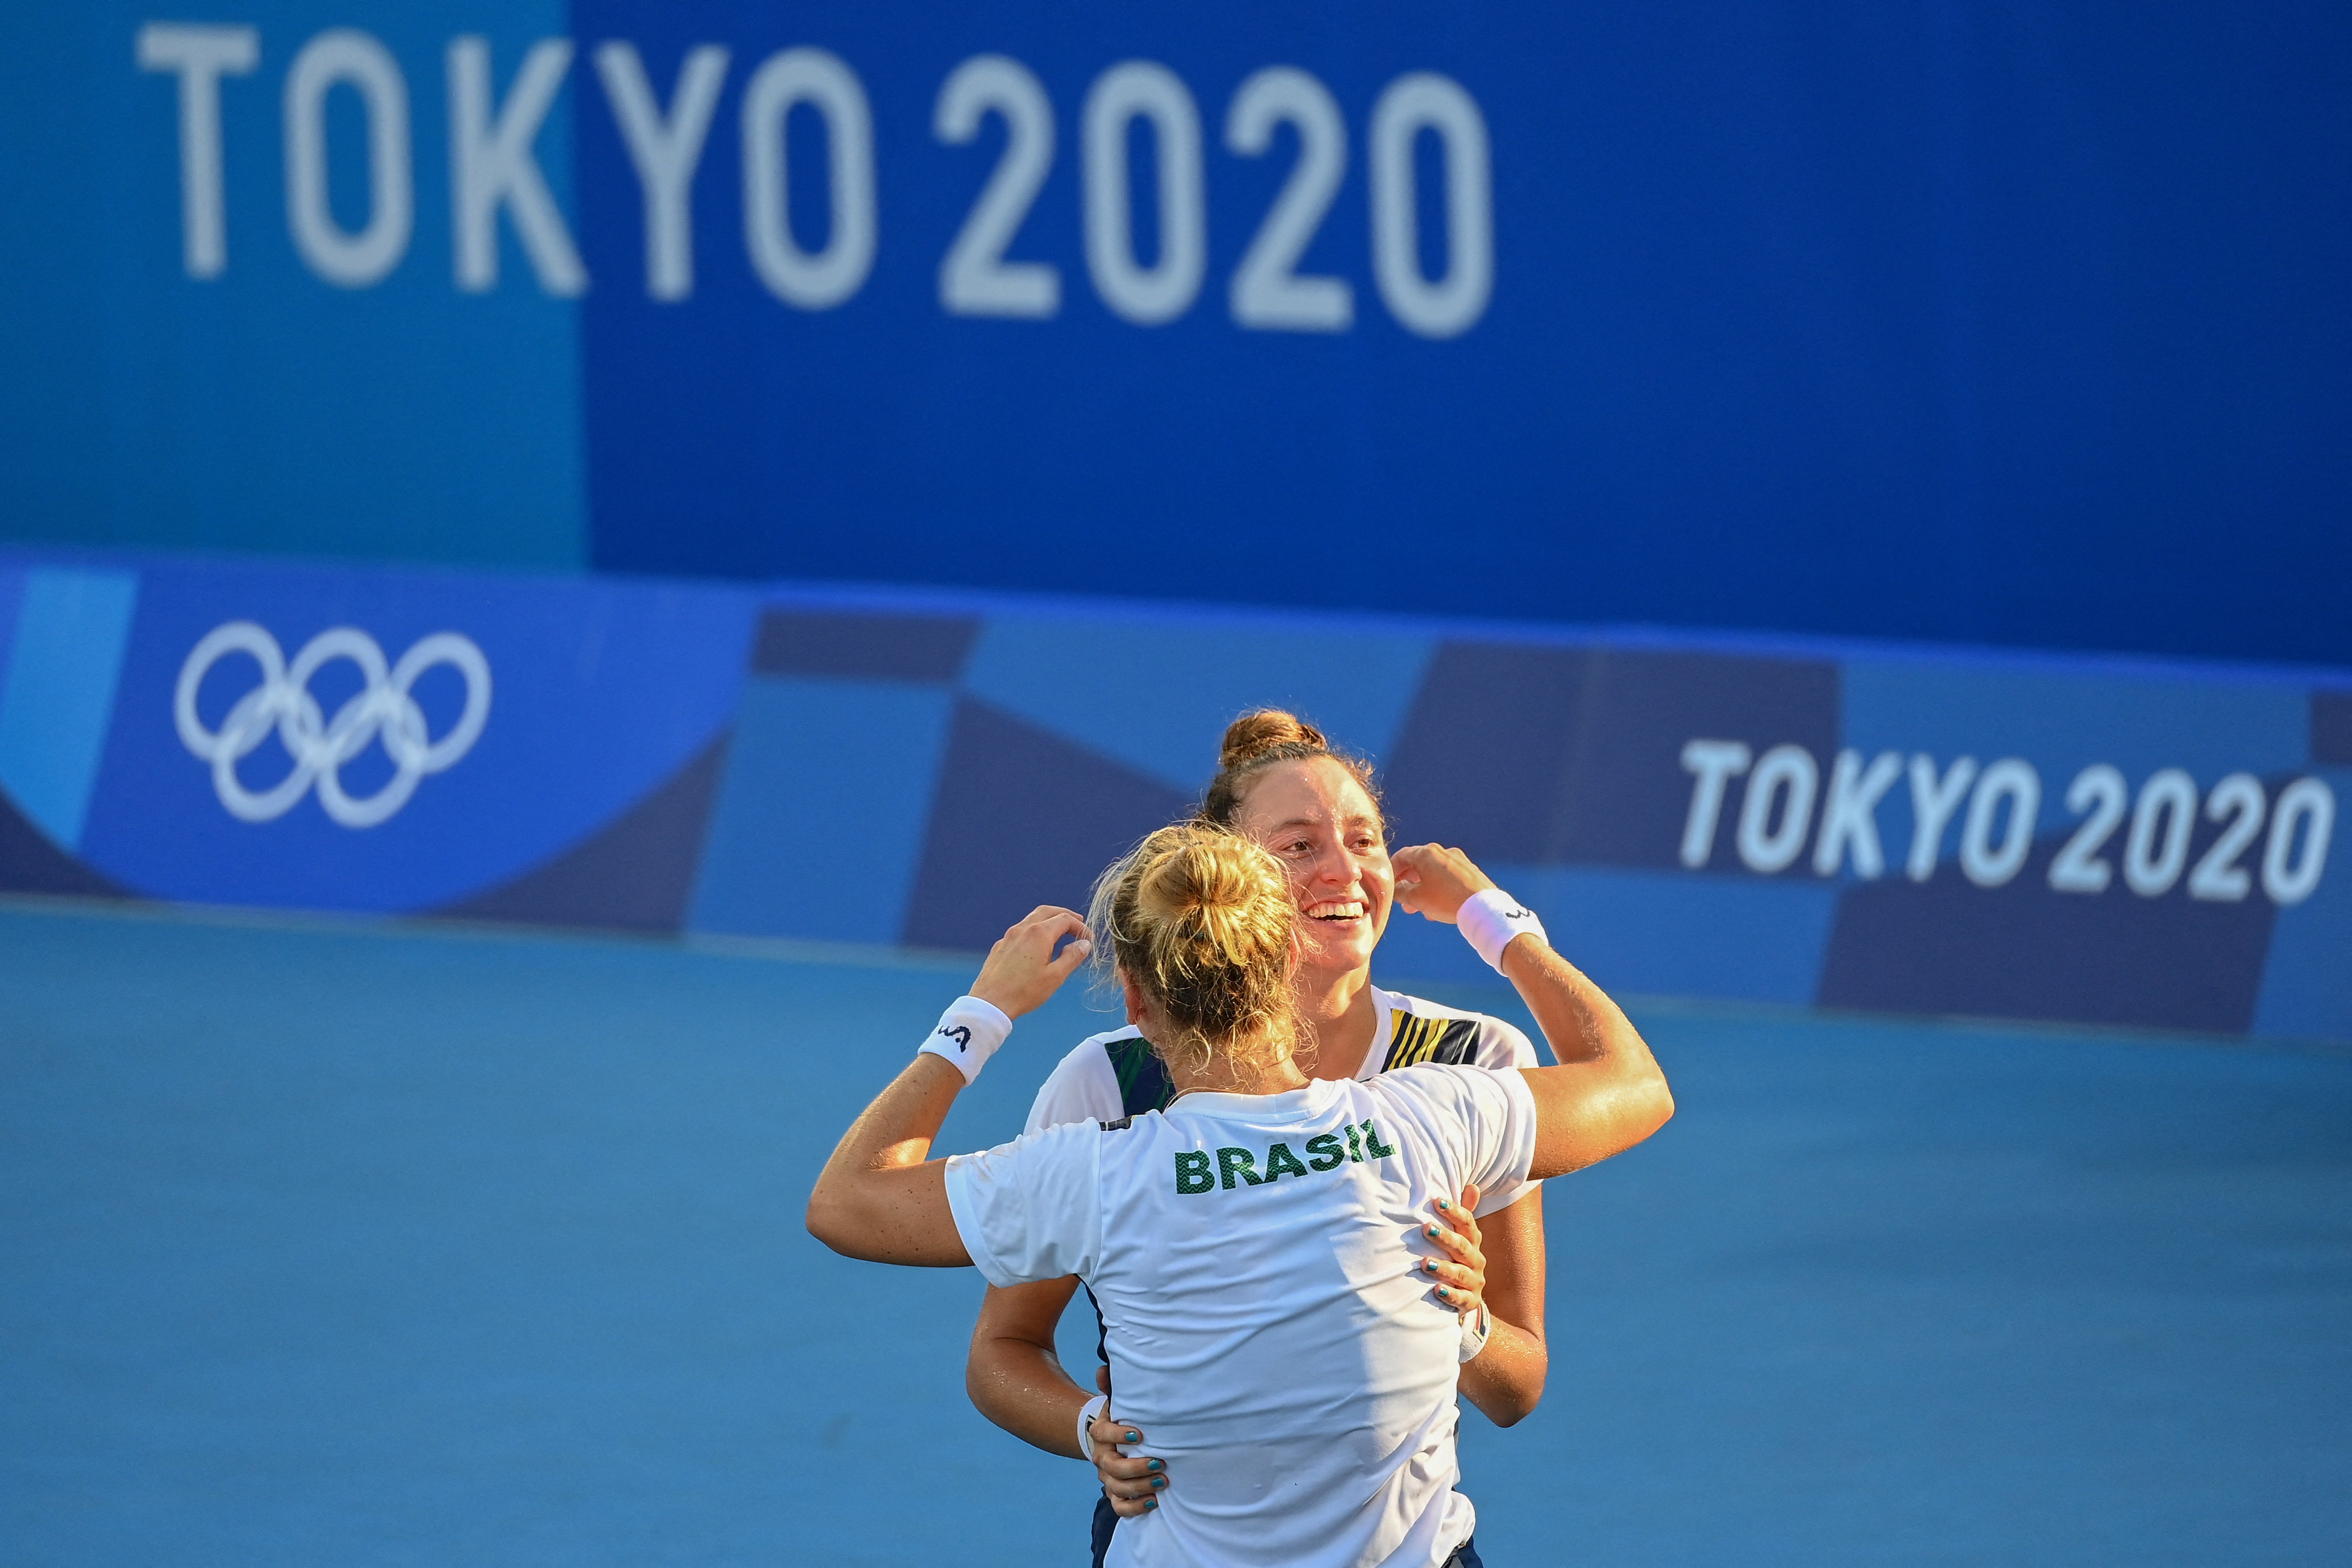 Fotos: Laura Pigossi e Luisa Stefani levam o bronze no tênis